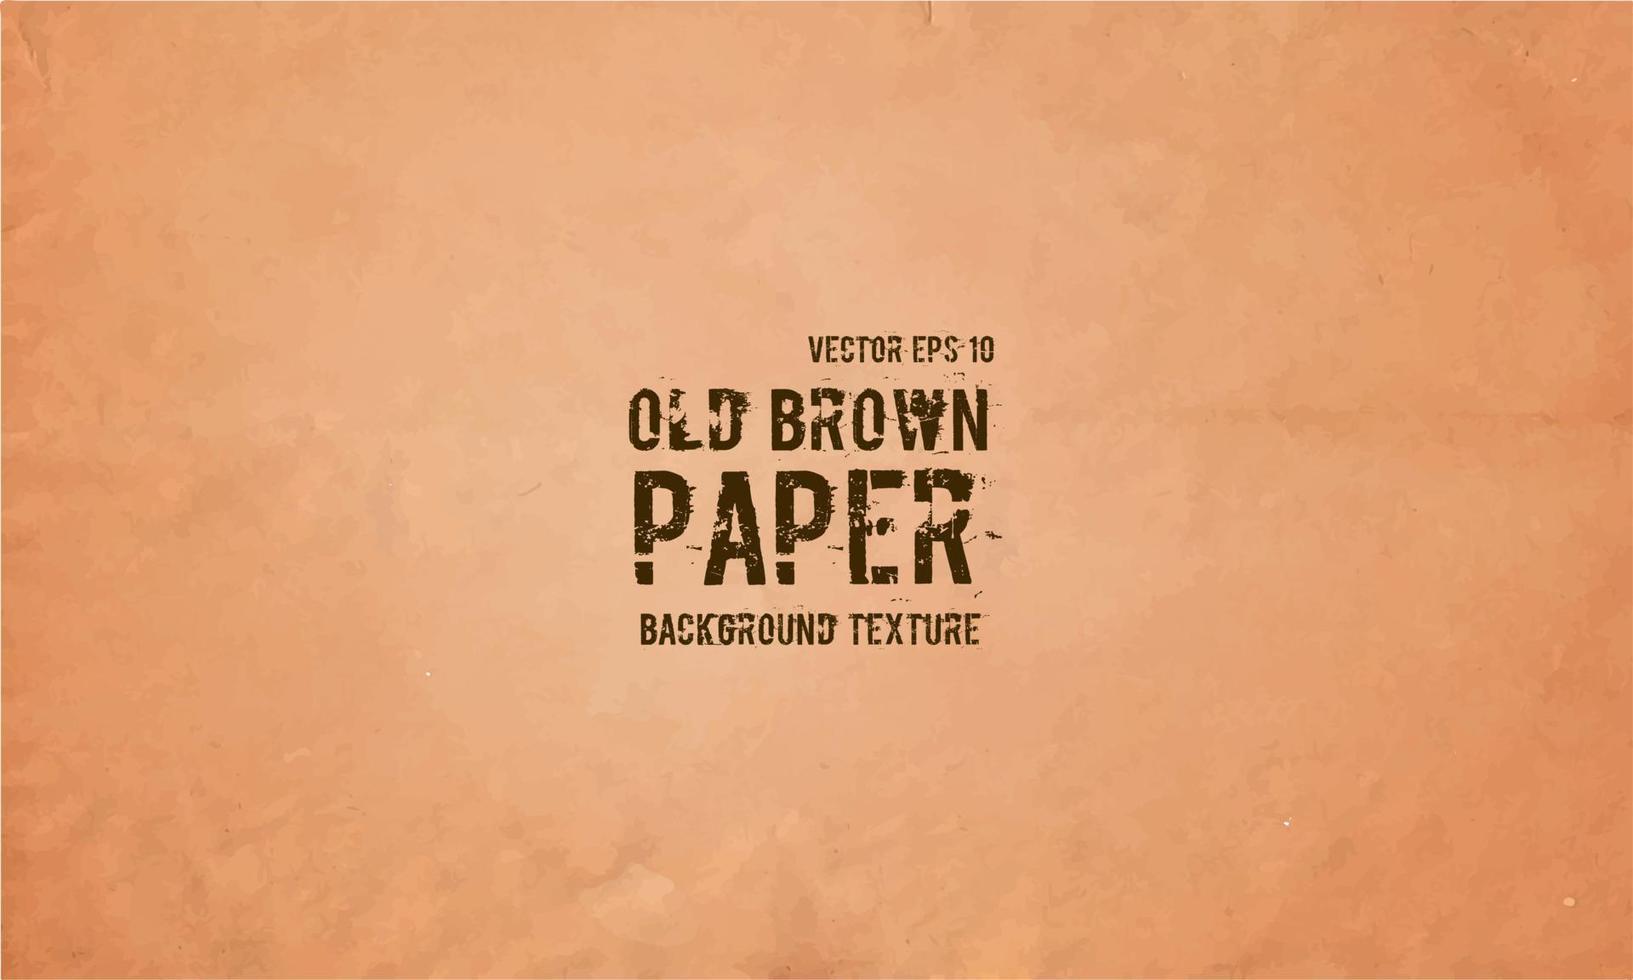 gamla papper brun bakgrund textur mall. vektor eps 10